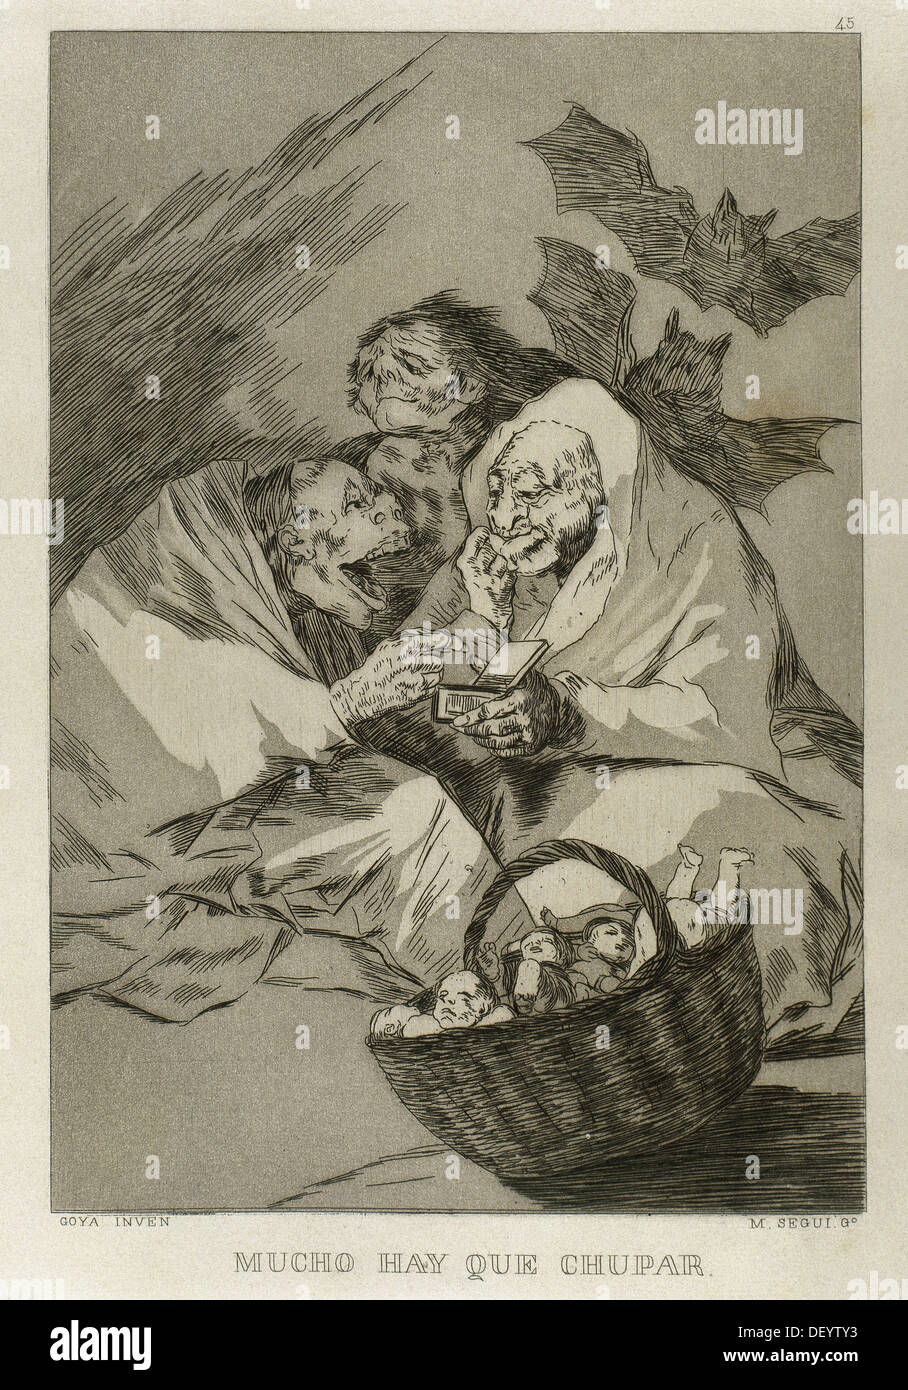 Francisco de Goya (1746-1828). Los Caprichos. Mucho hay que chupar... (There is much to lick). Number 45. Aquatint. 1799. Stock Photo